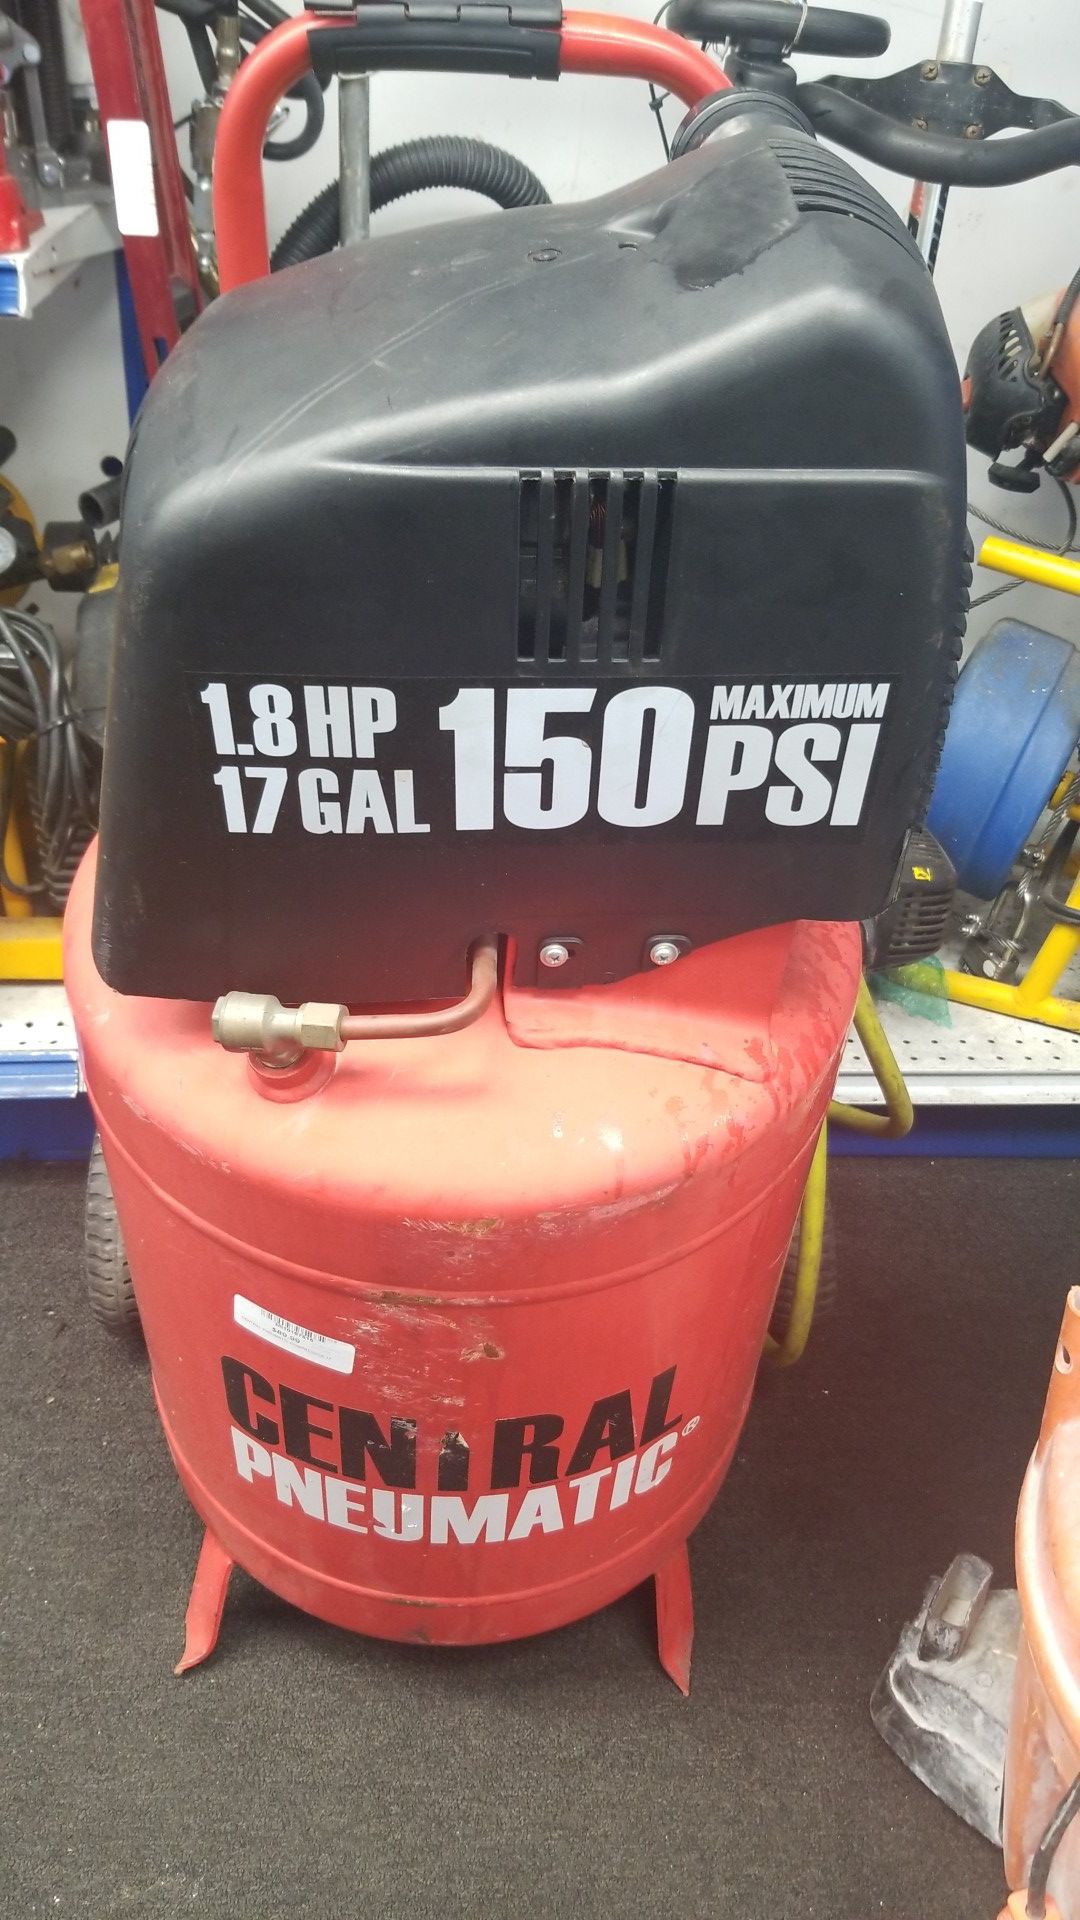 Central pneumatic compressor